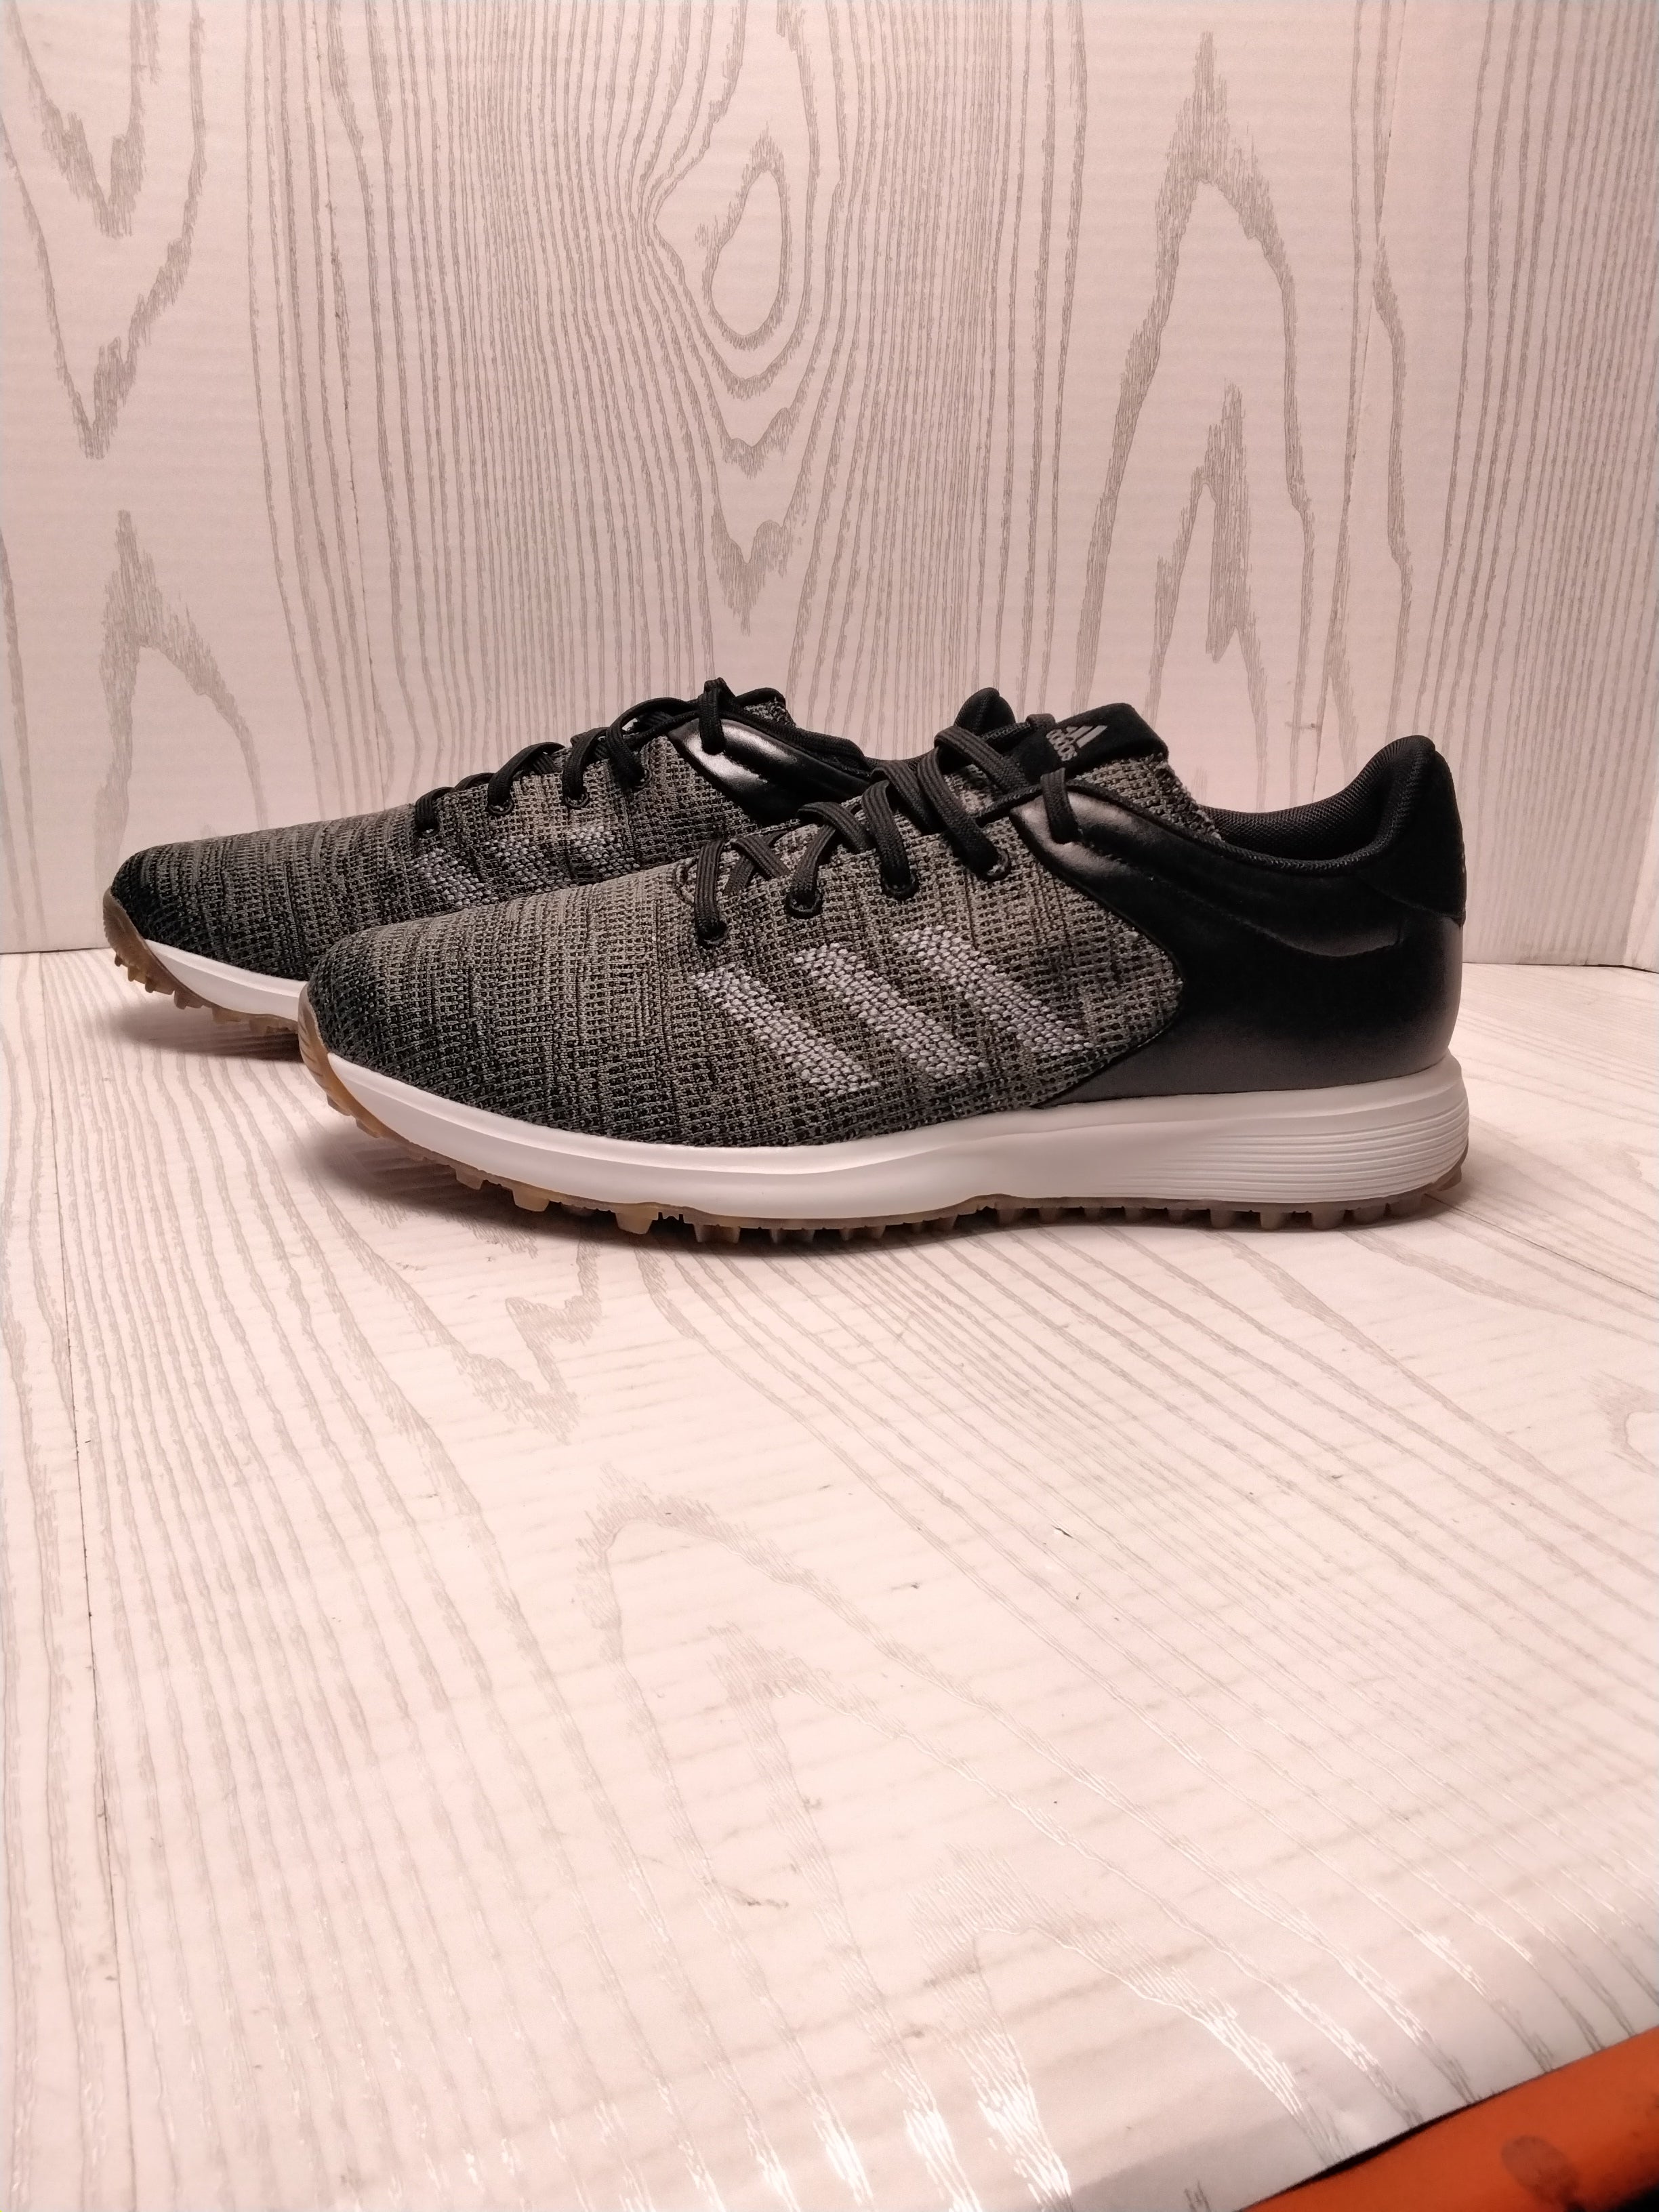 adidas Men's S2g Golf Shoe, Size 9.5 - Core Black/Grey Three (7884610797806)